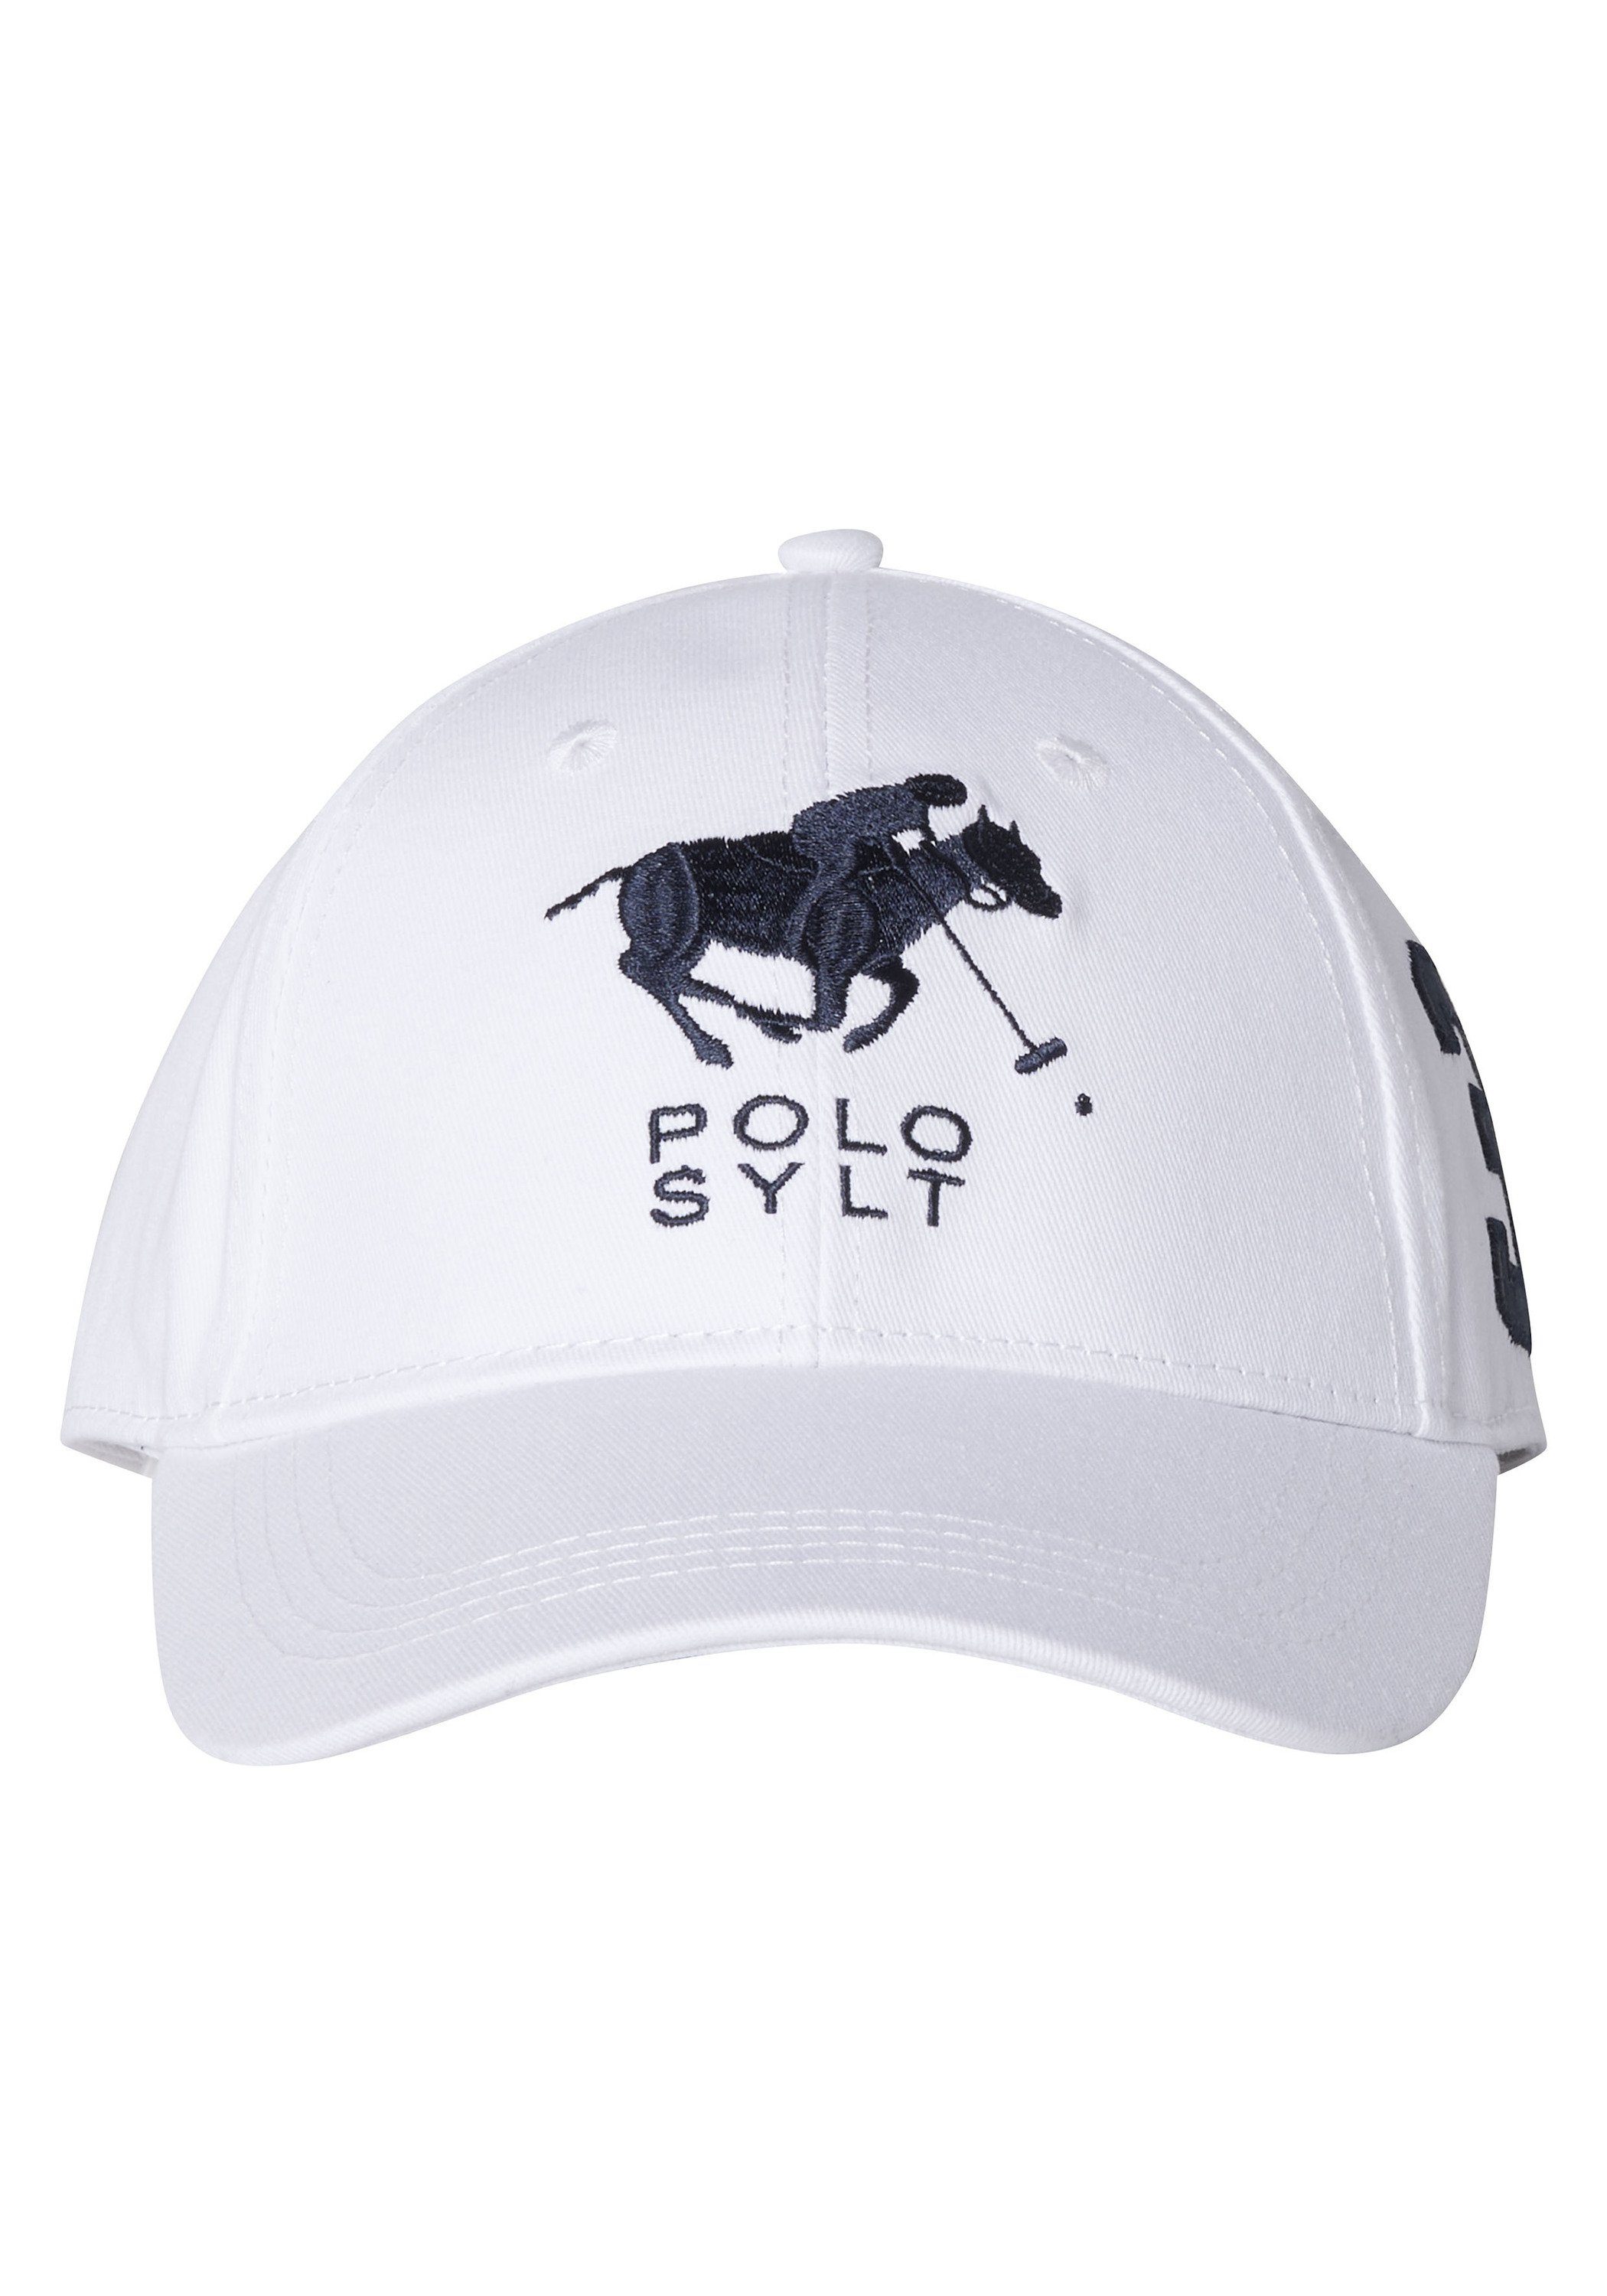 Polo Sylt Baseball Cap im Label-Design | Baseball Caps